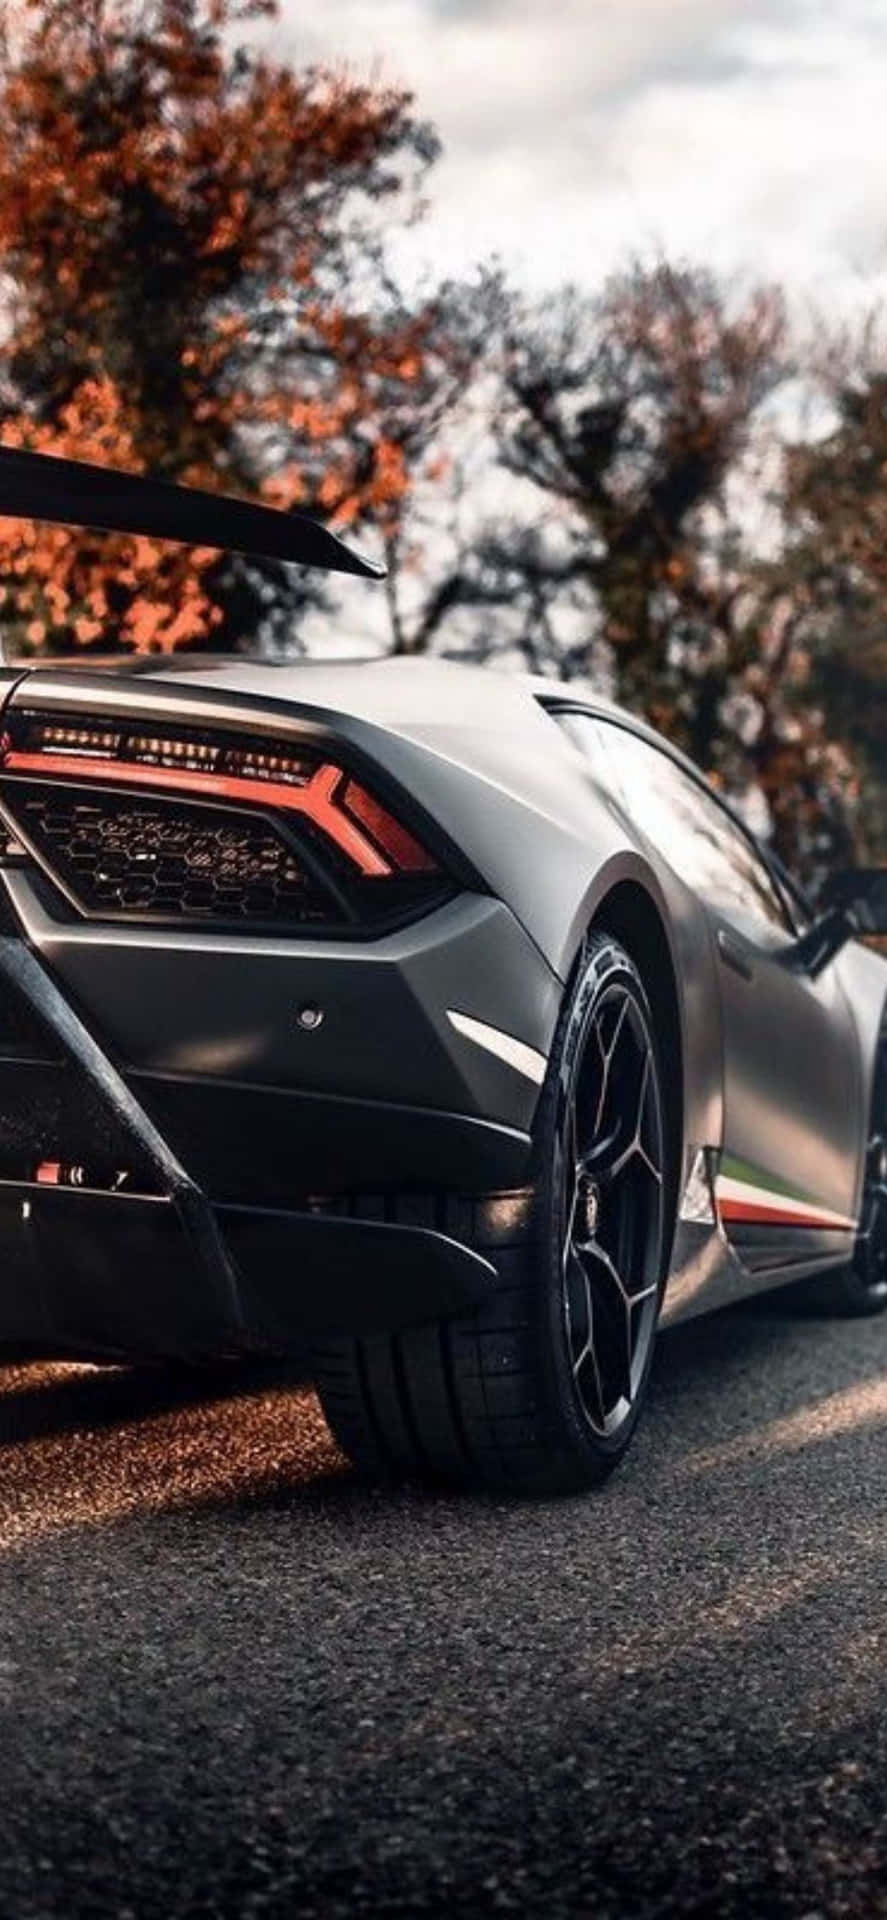 Iphonexs Max Lamborghini Huracan Bakgrundsbild.